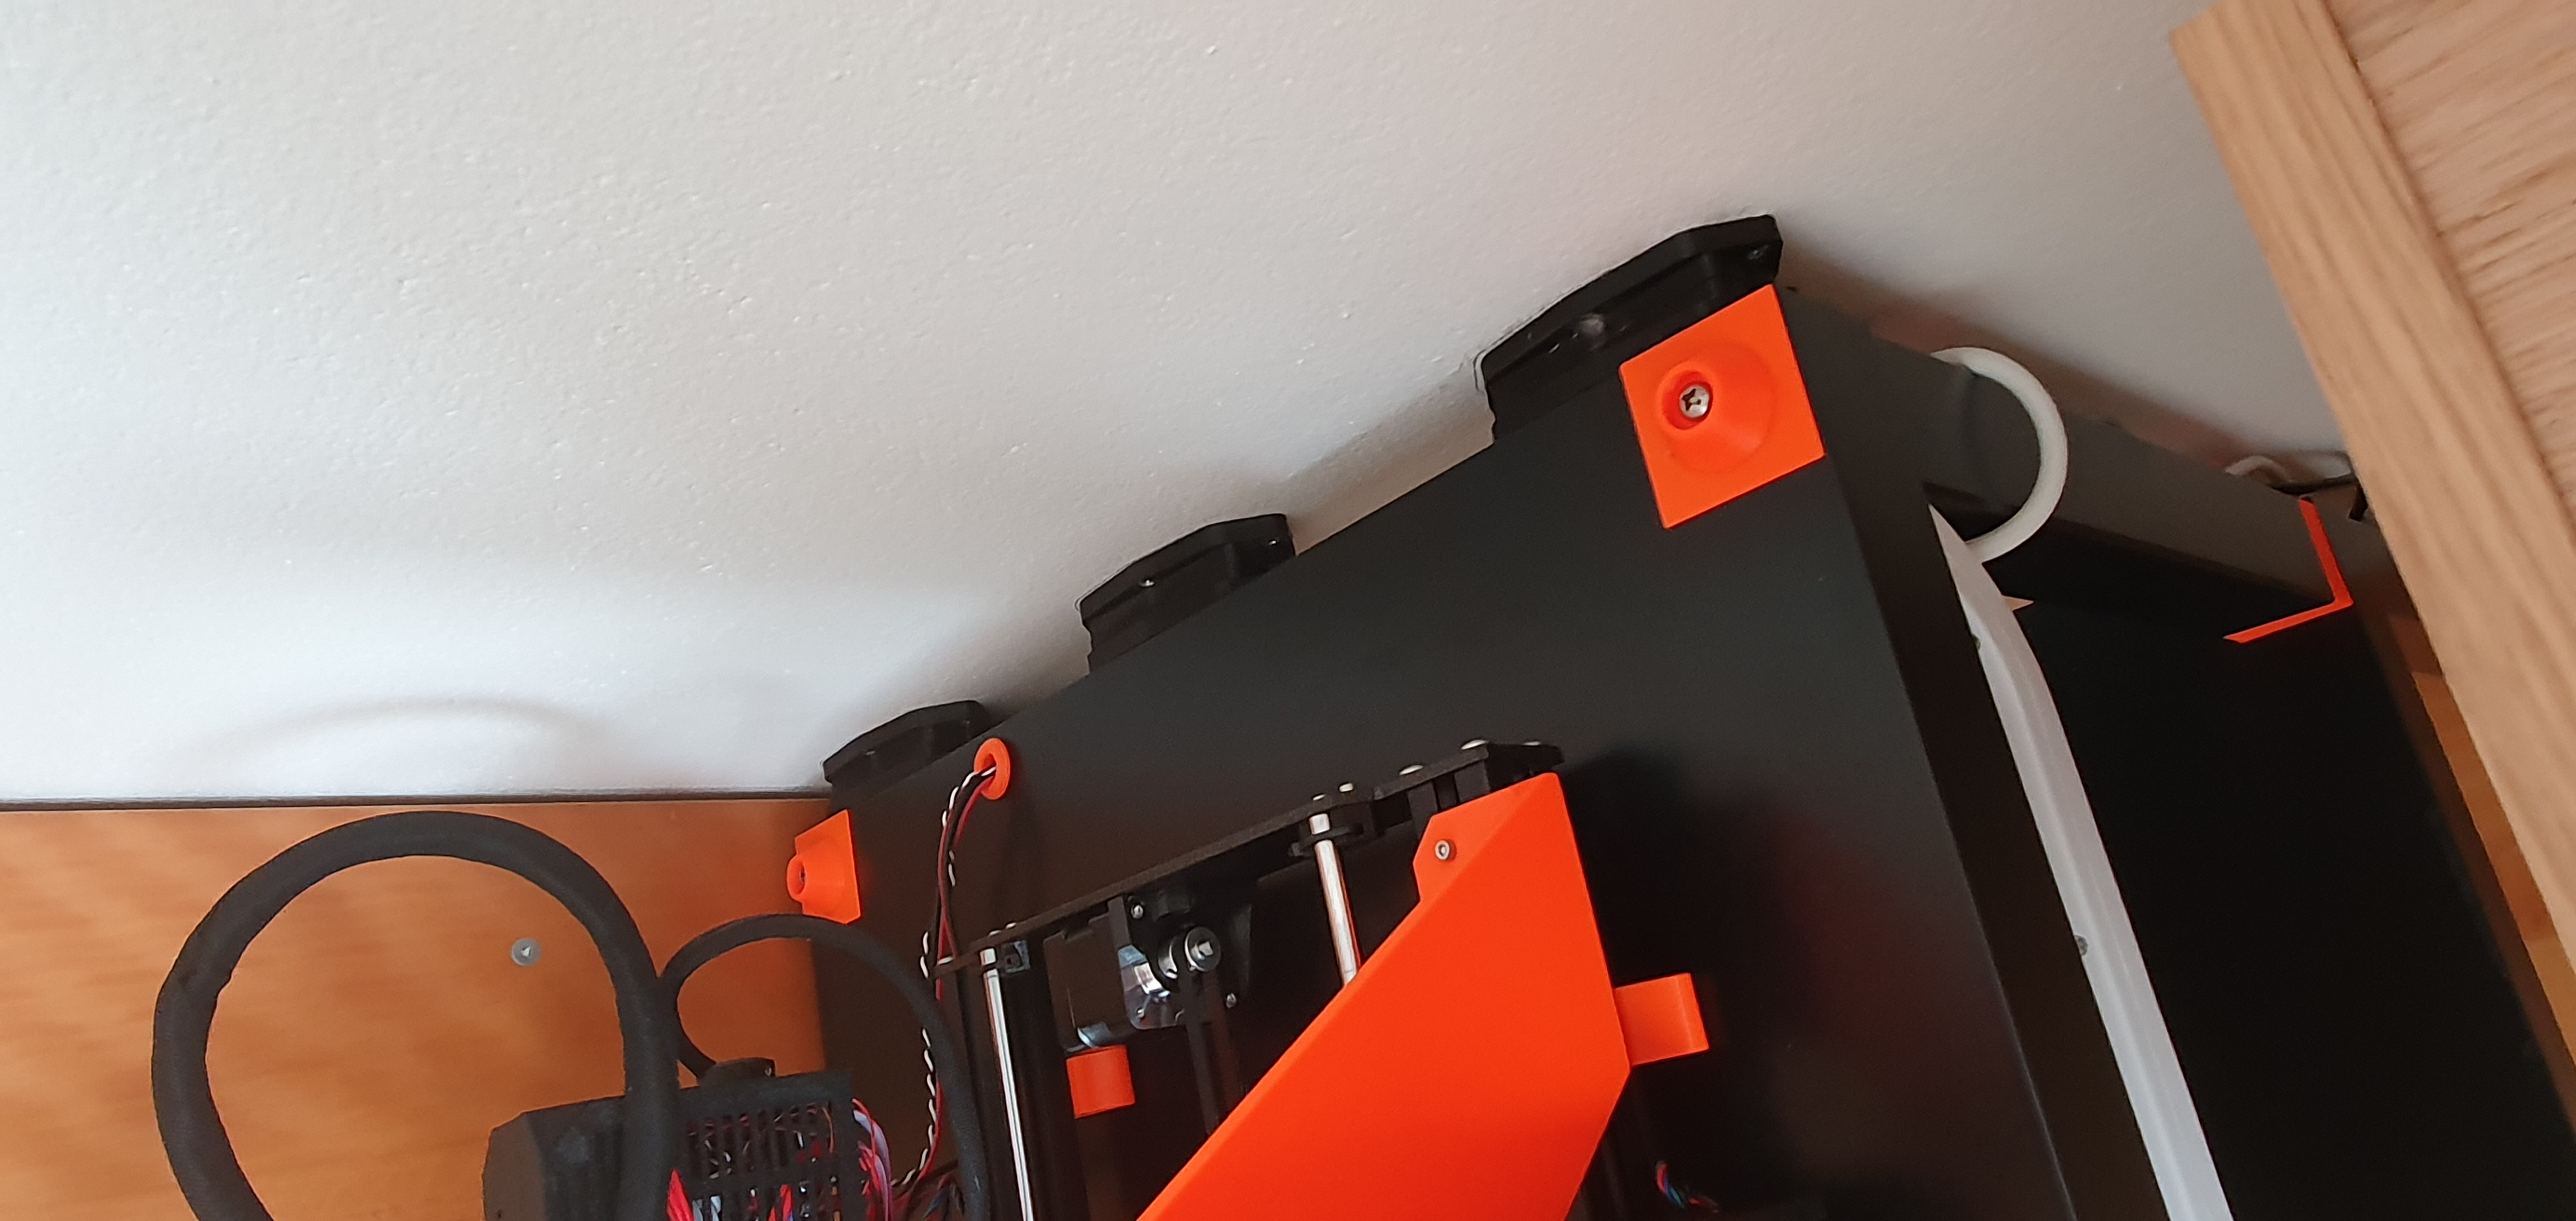 Magnetic 3D printer stiffener for IKEA LACK based printer stands